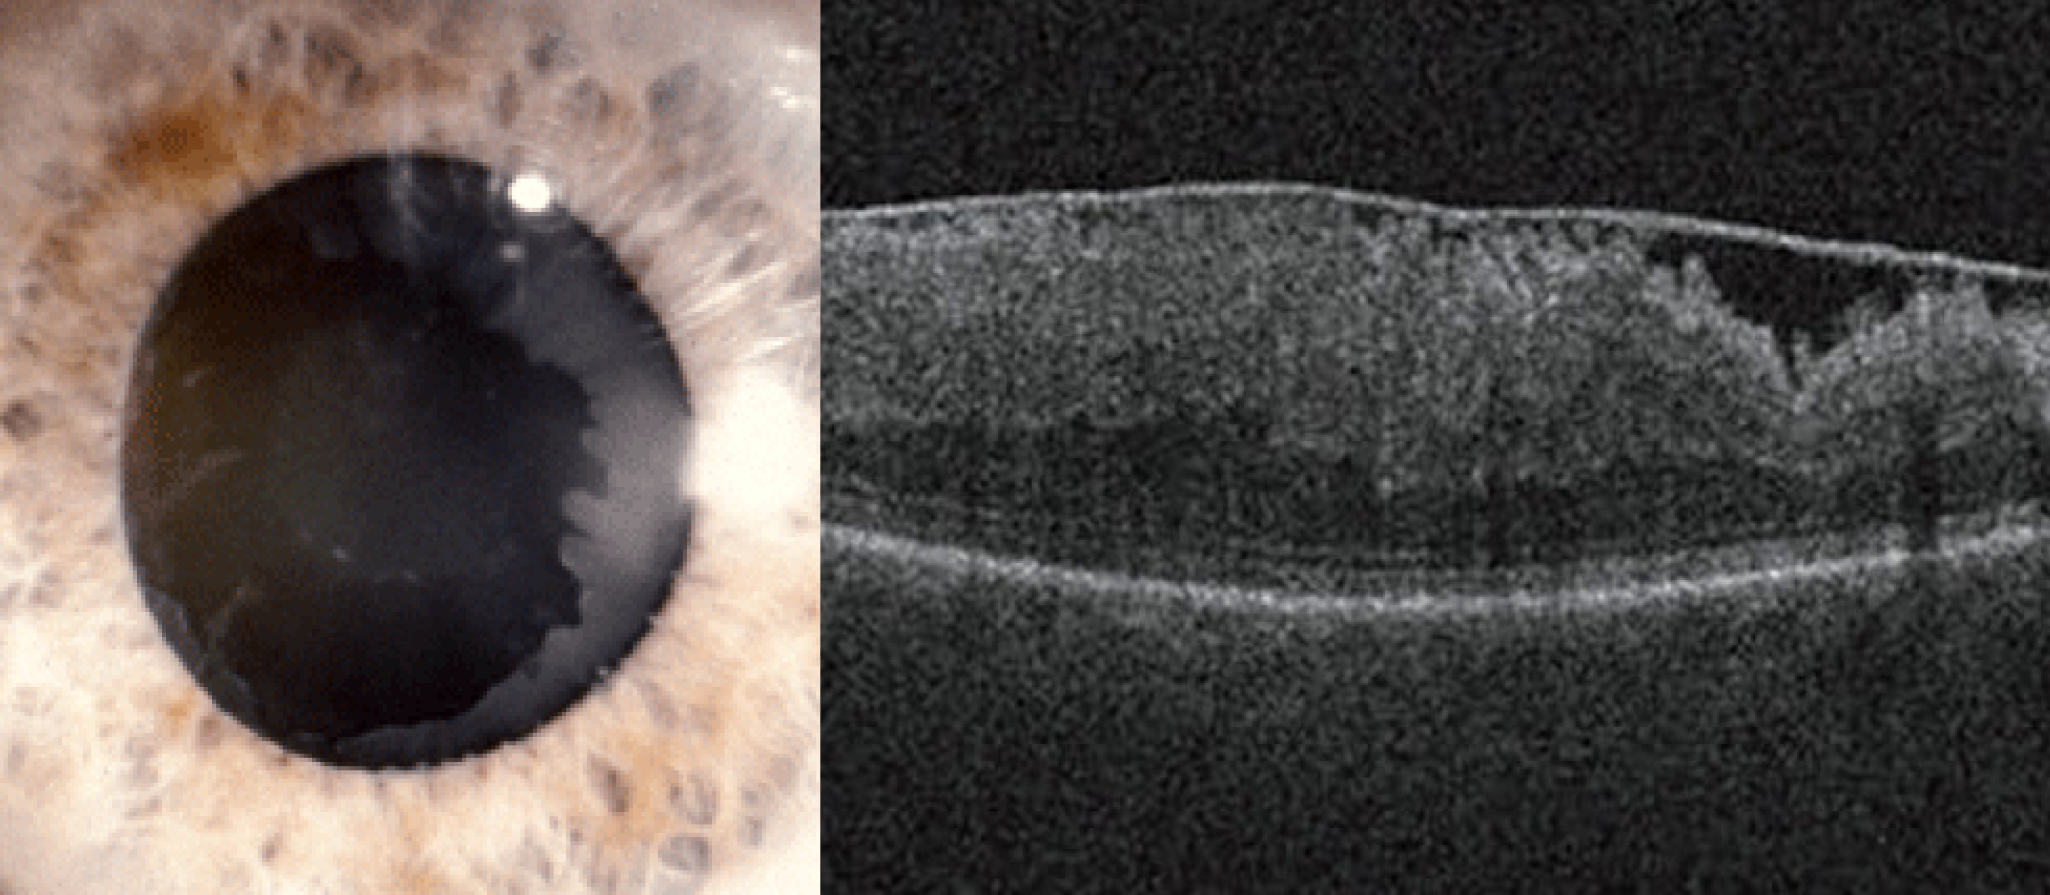 This study linked pseudoexfoliative glaucoma and epiretinal membrane deterioration.